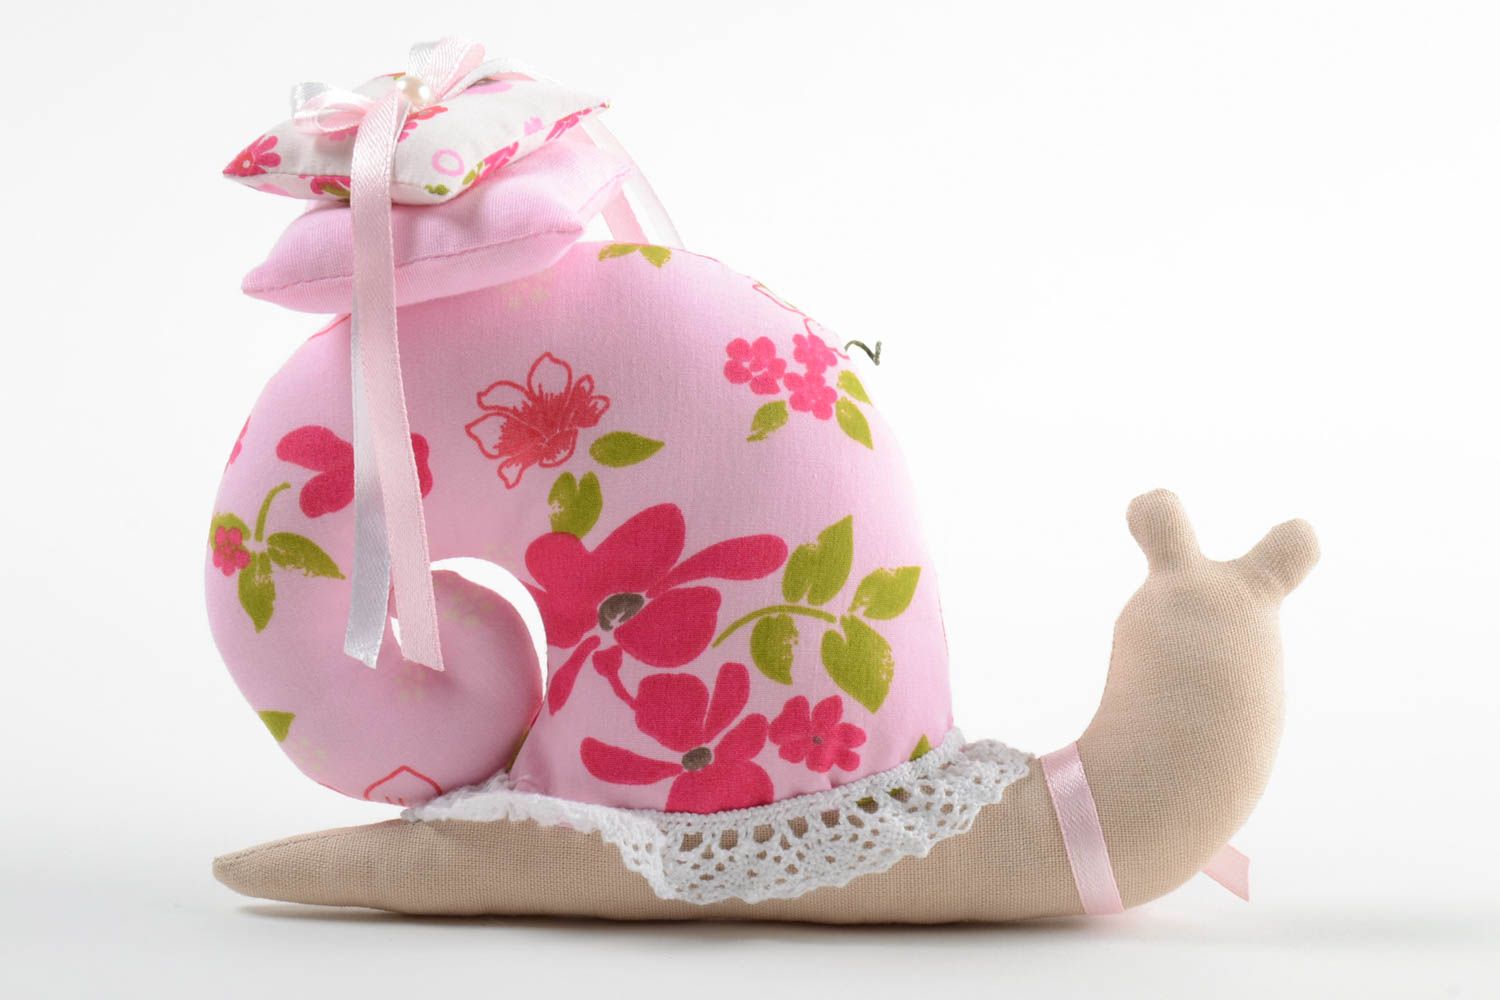 Beautiful homemade fabric toy decorative soft toys interior decorating photo 3